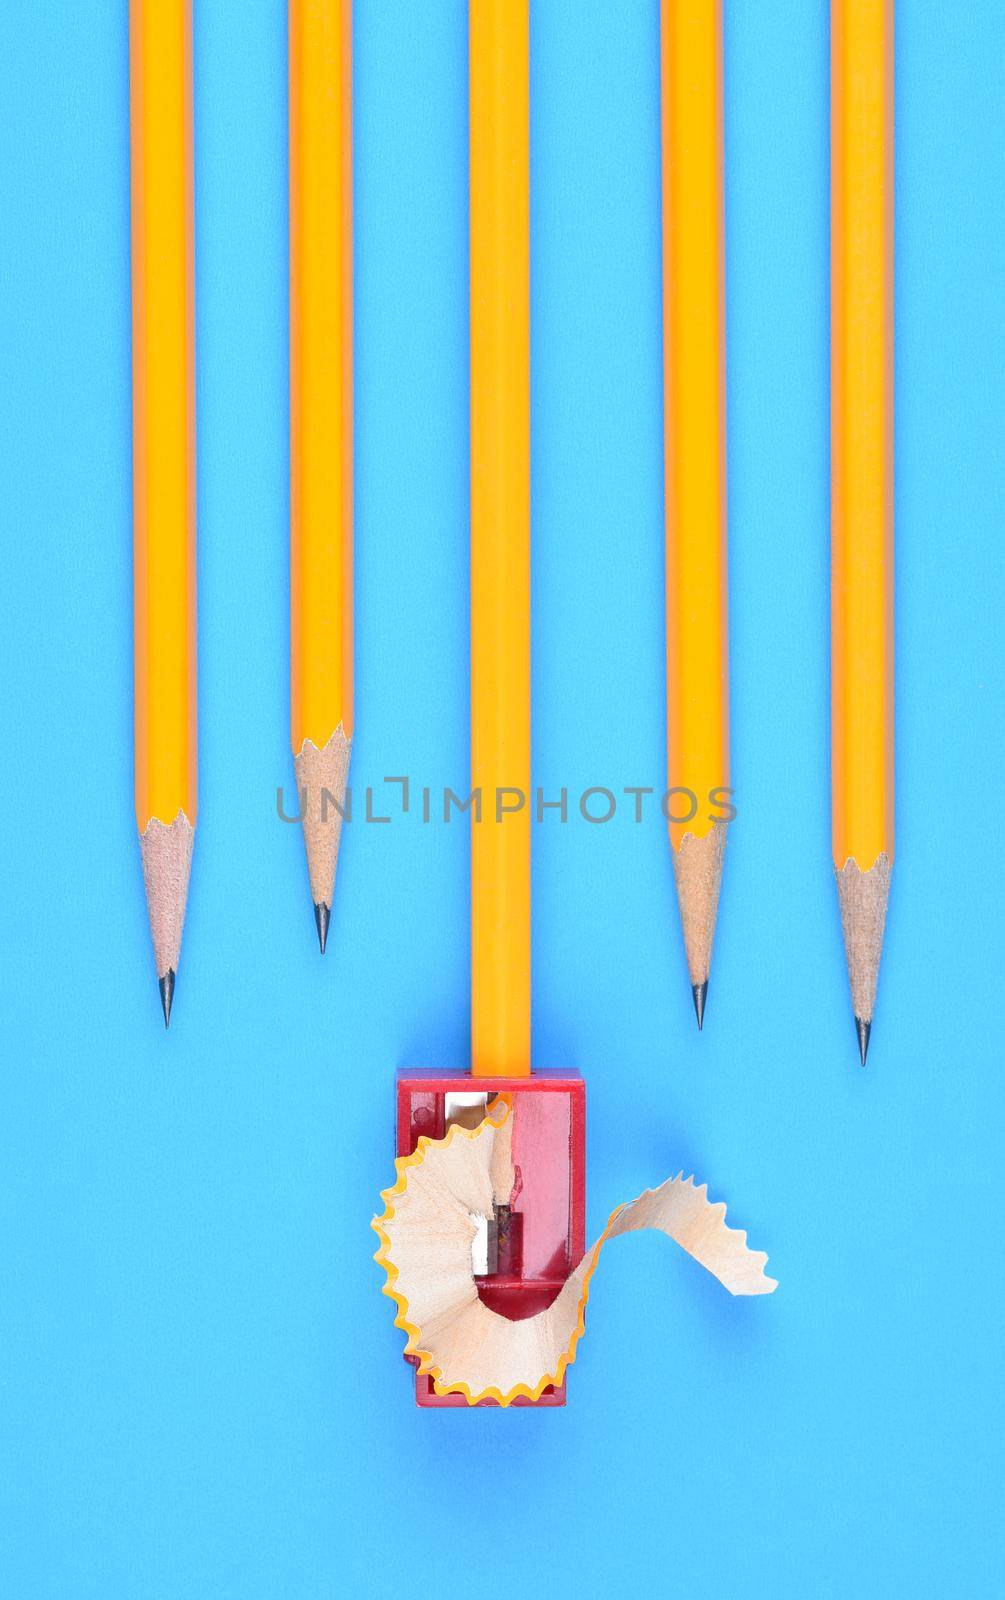 Back to School Concept - Yellow Pencils by sCukrov